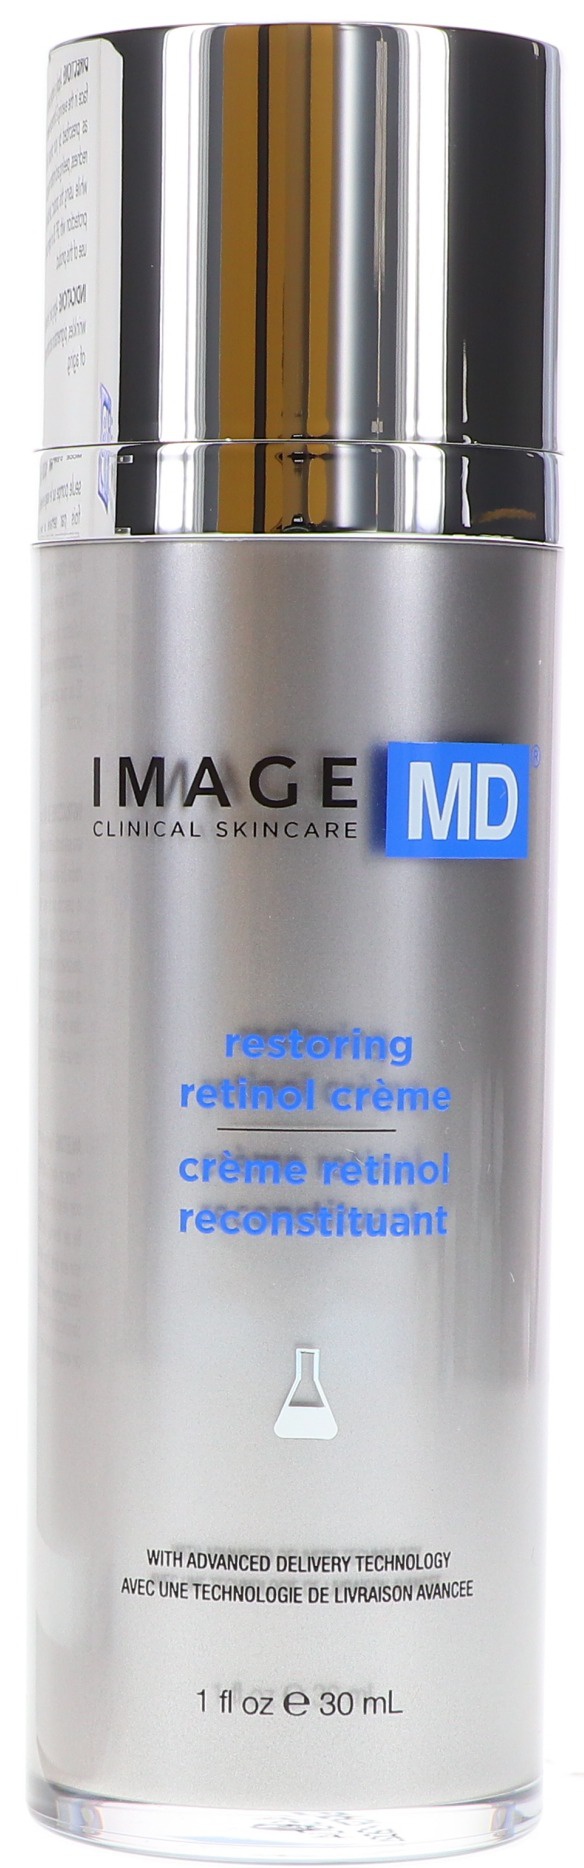 Image Skincare Image MD Restoring Retinol Crème